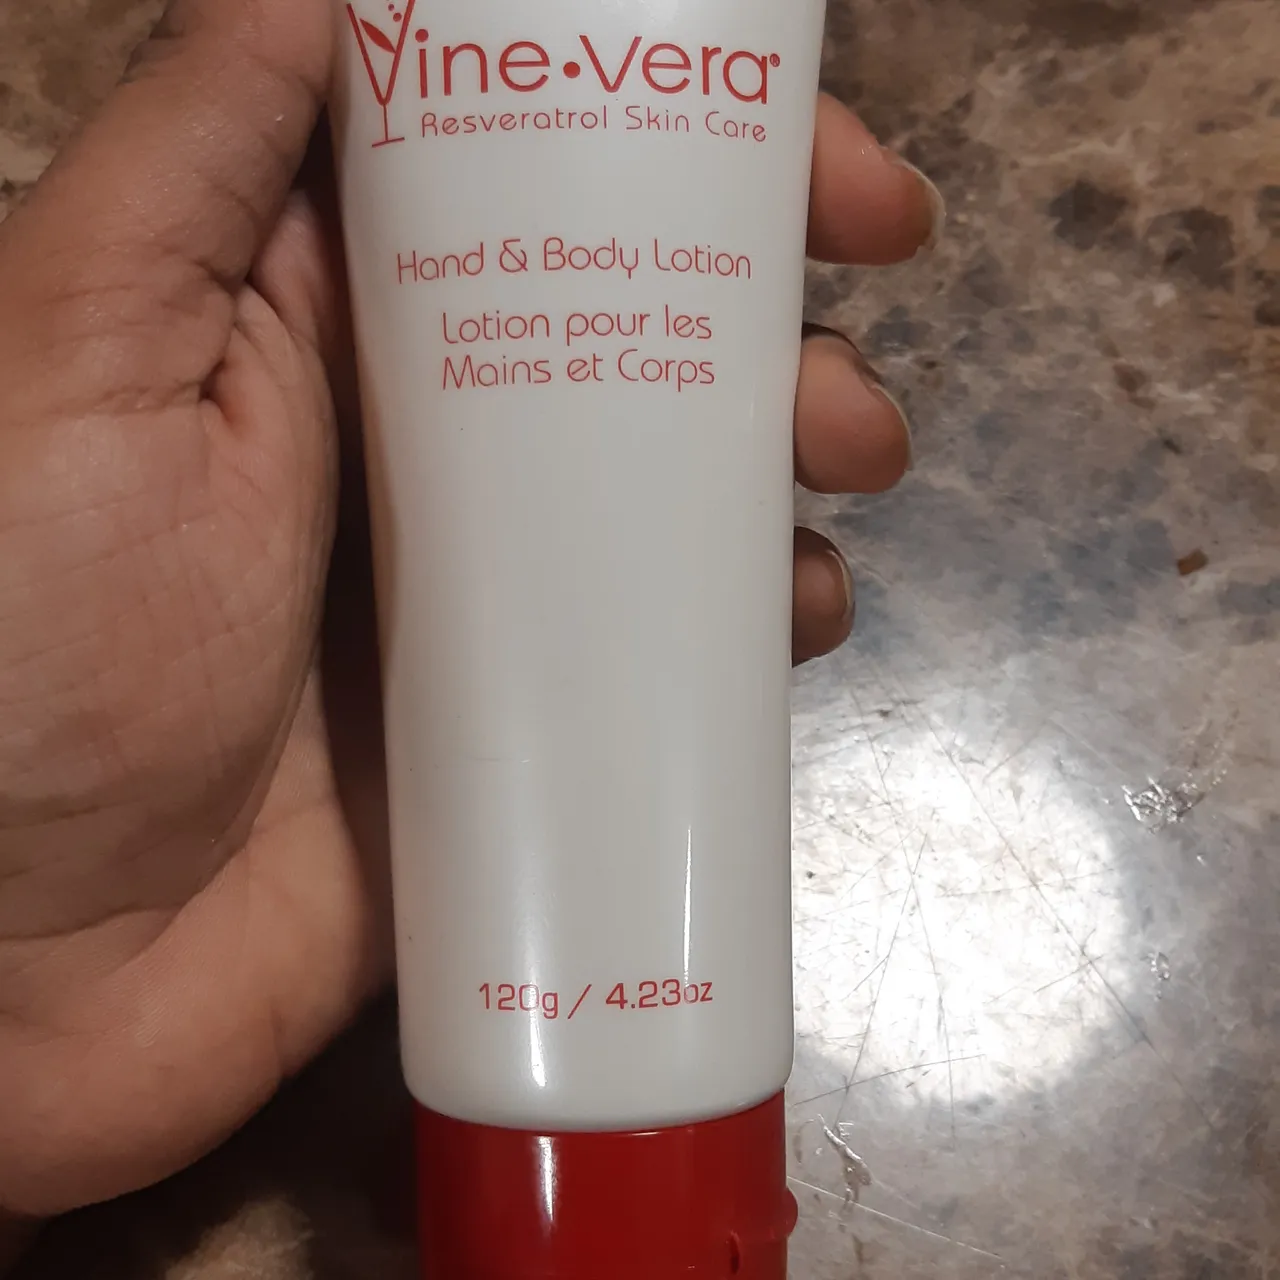 Vine.vera hand & body lotion  photo 1